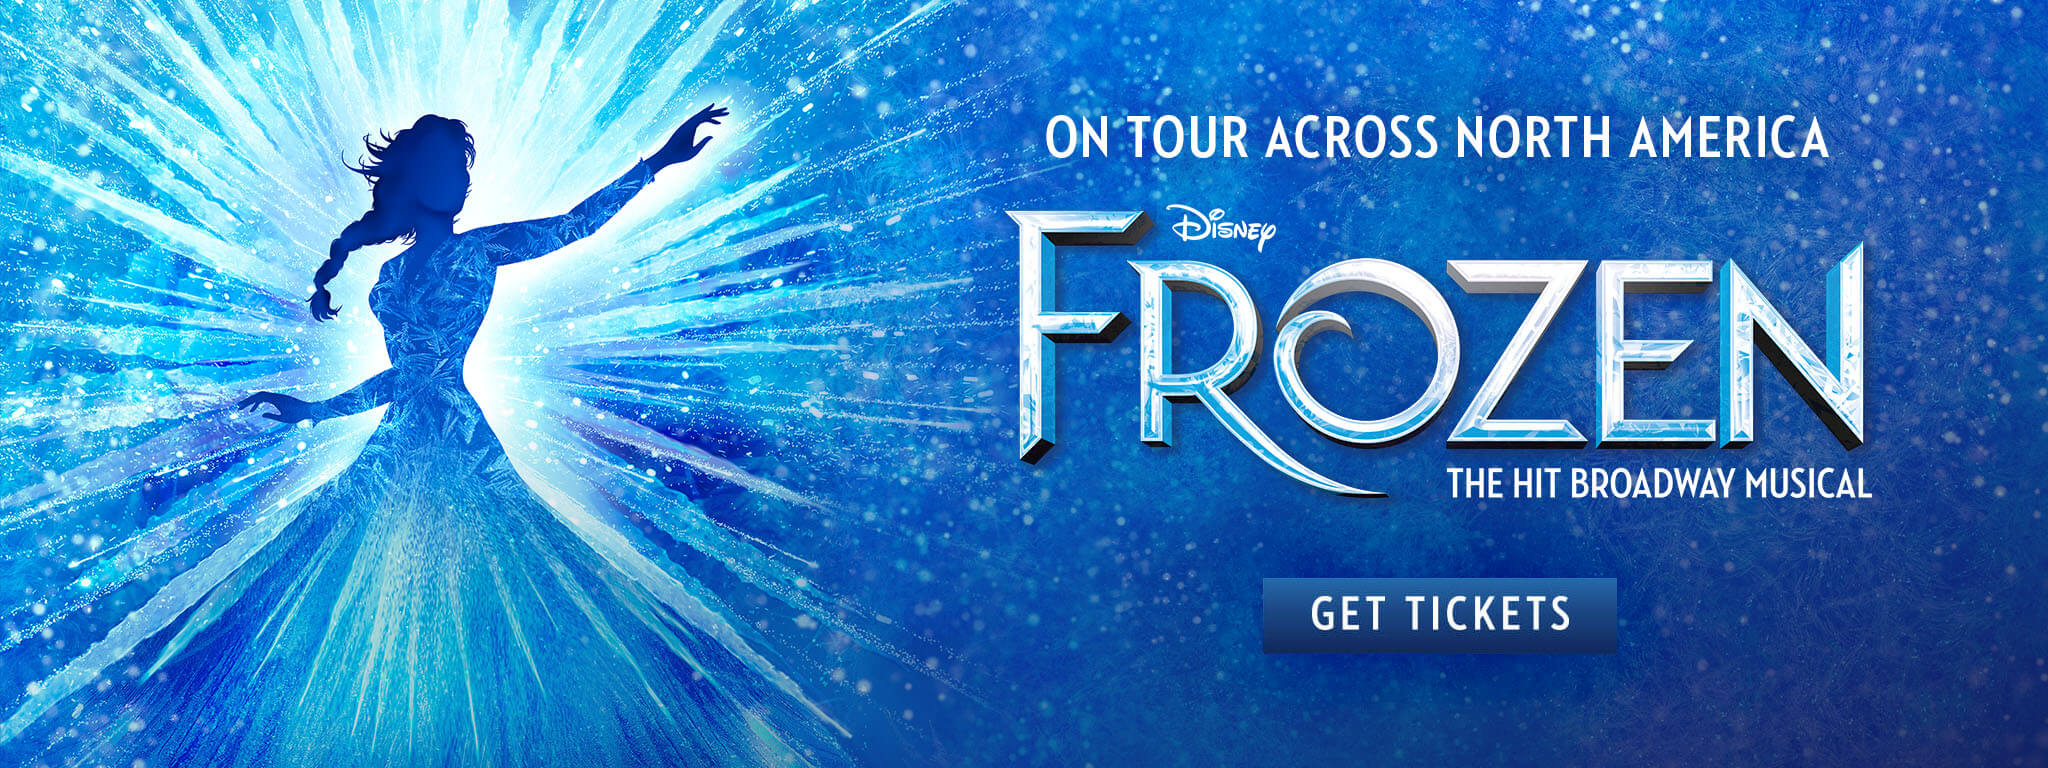 Disney FROZEN - On Tour Across North America - Get Tickets